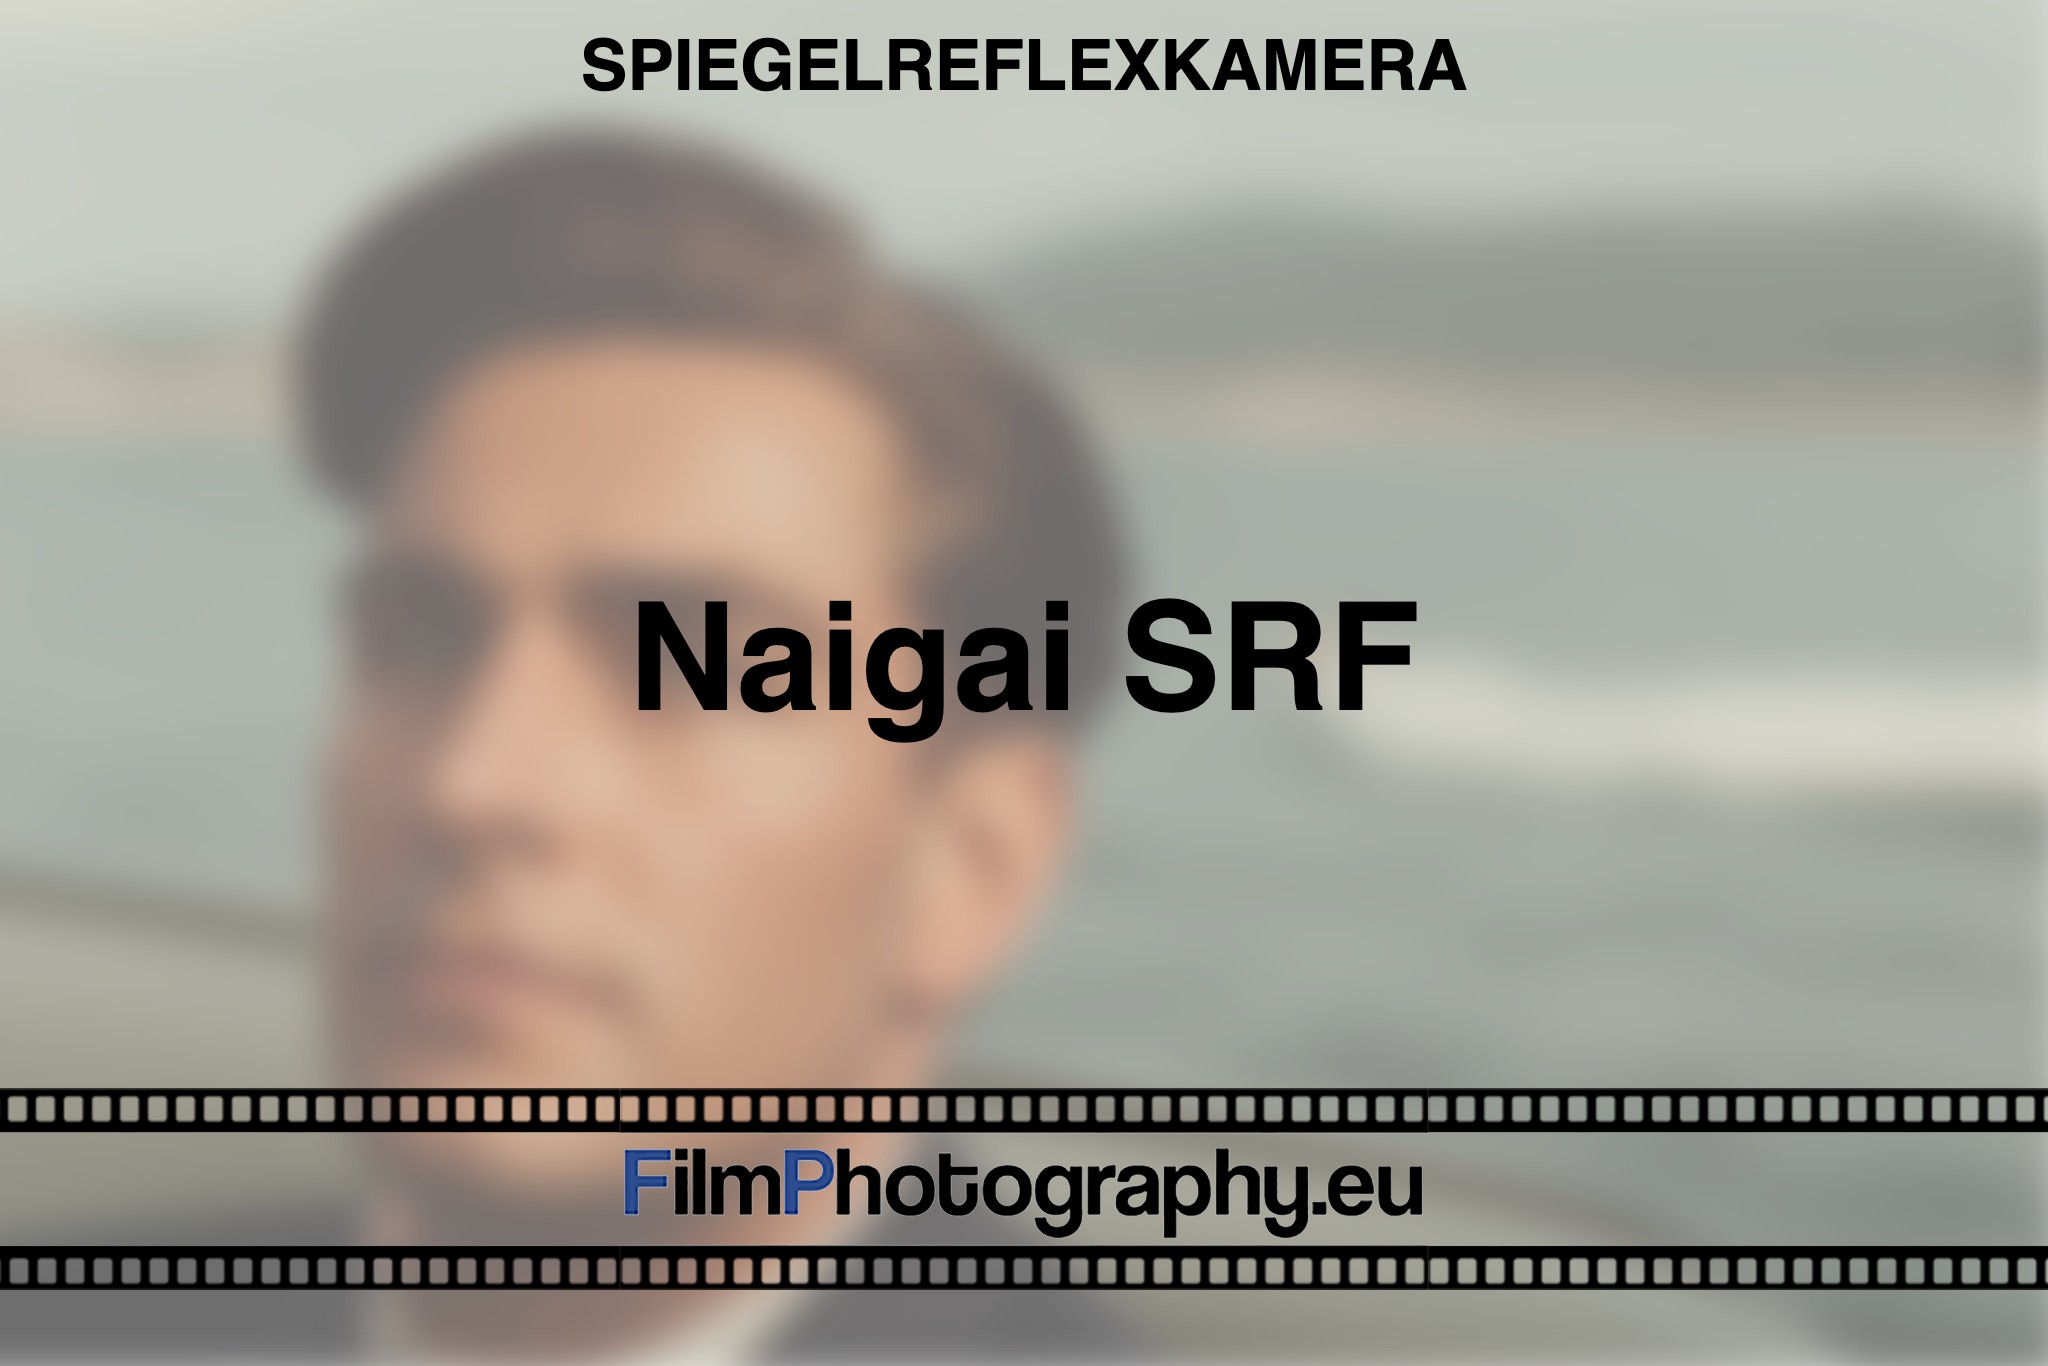 naigai-srf-spiegelreflexkamera-bnv